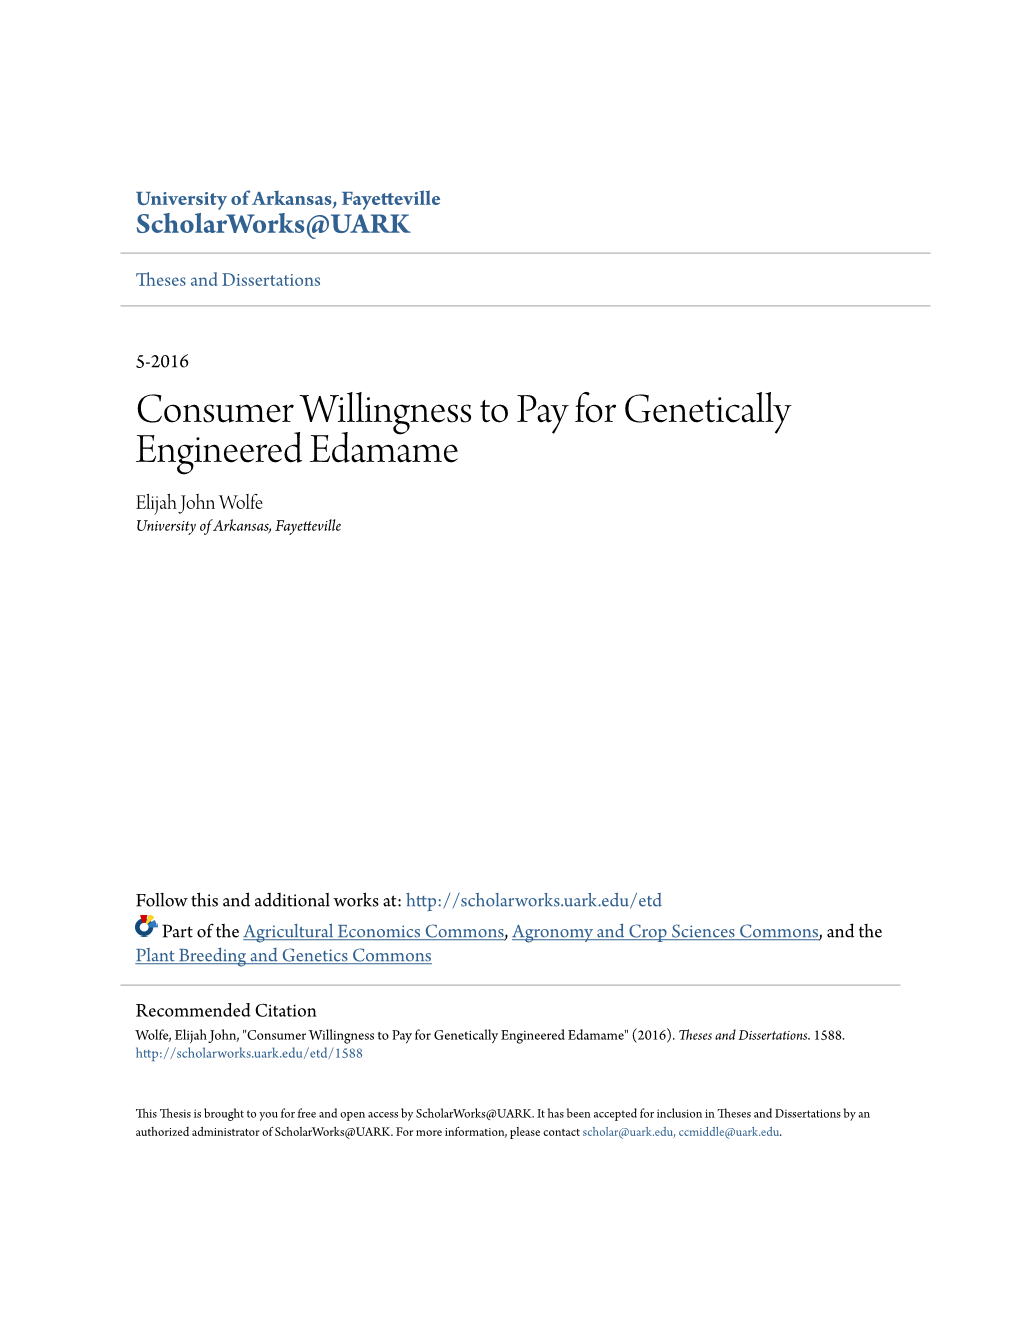 Consumer Willingness to Pay for Genetically Engineered Edamame Elijah John Wolfe University of Arkansas, Fayetteville